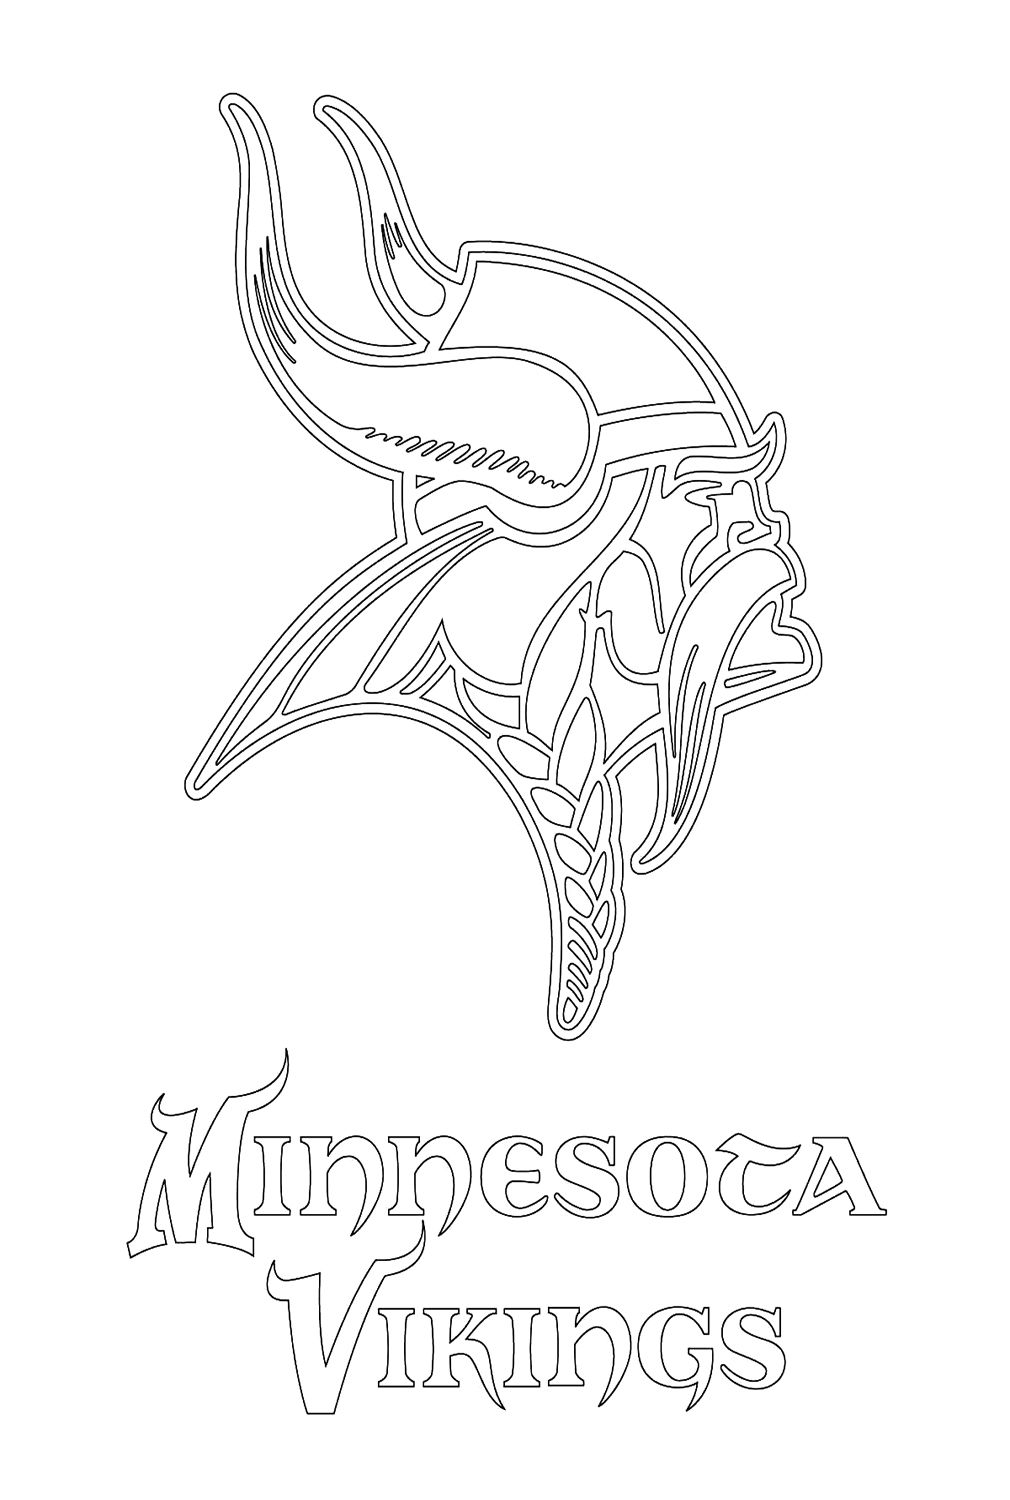 Minnesota Vikings Logo Coloring Page